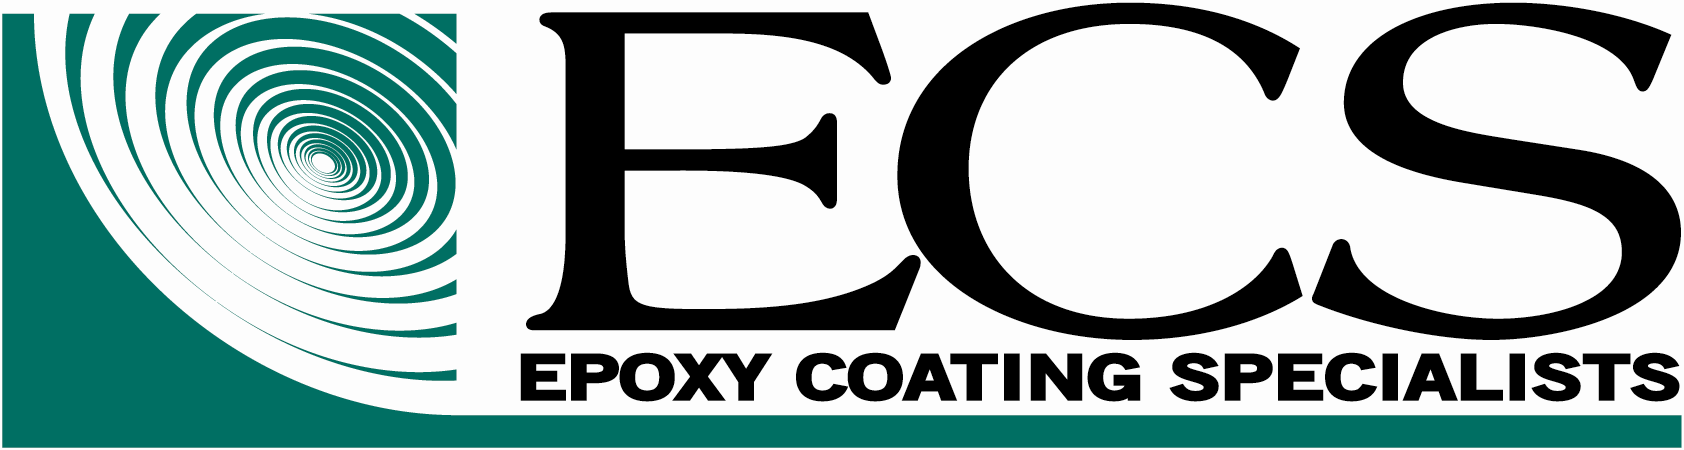 Epoxy Coating Specialists